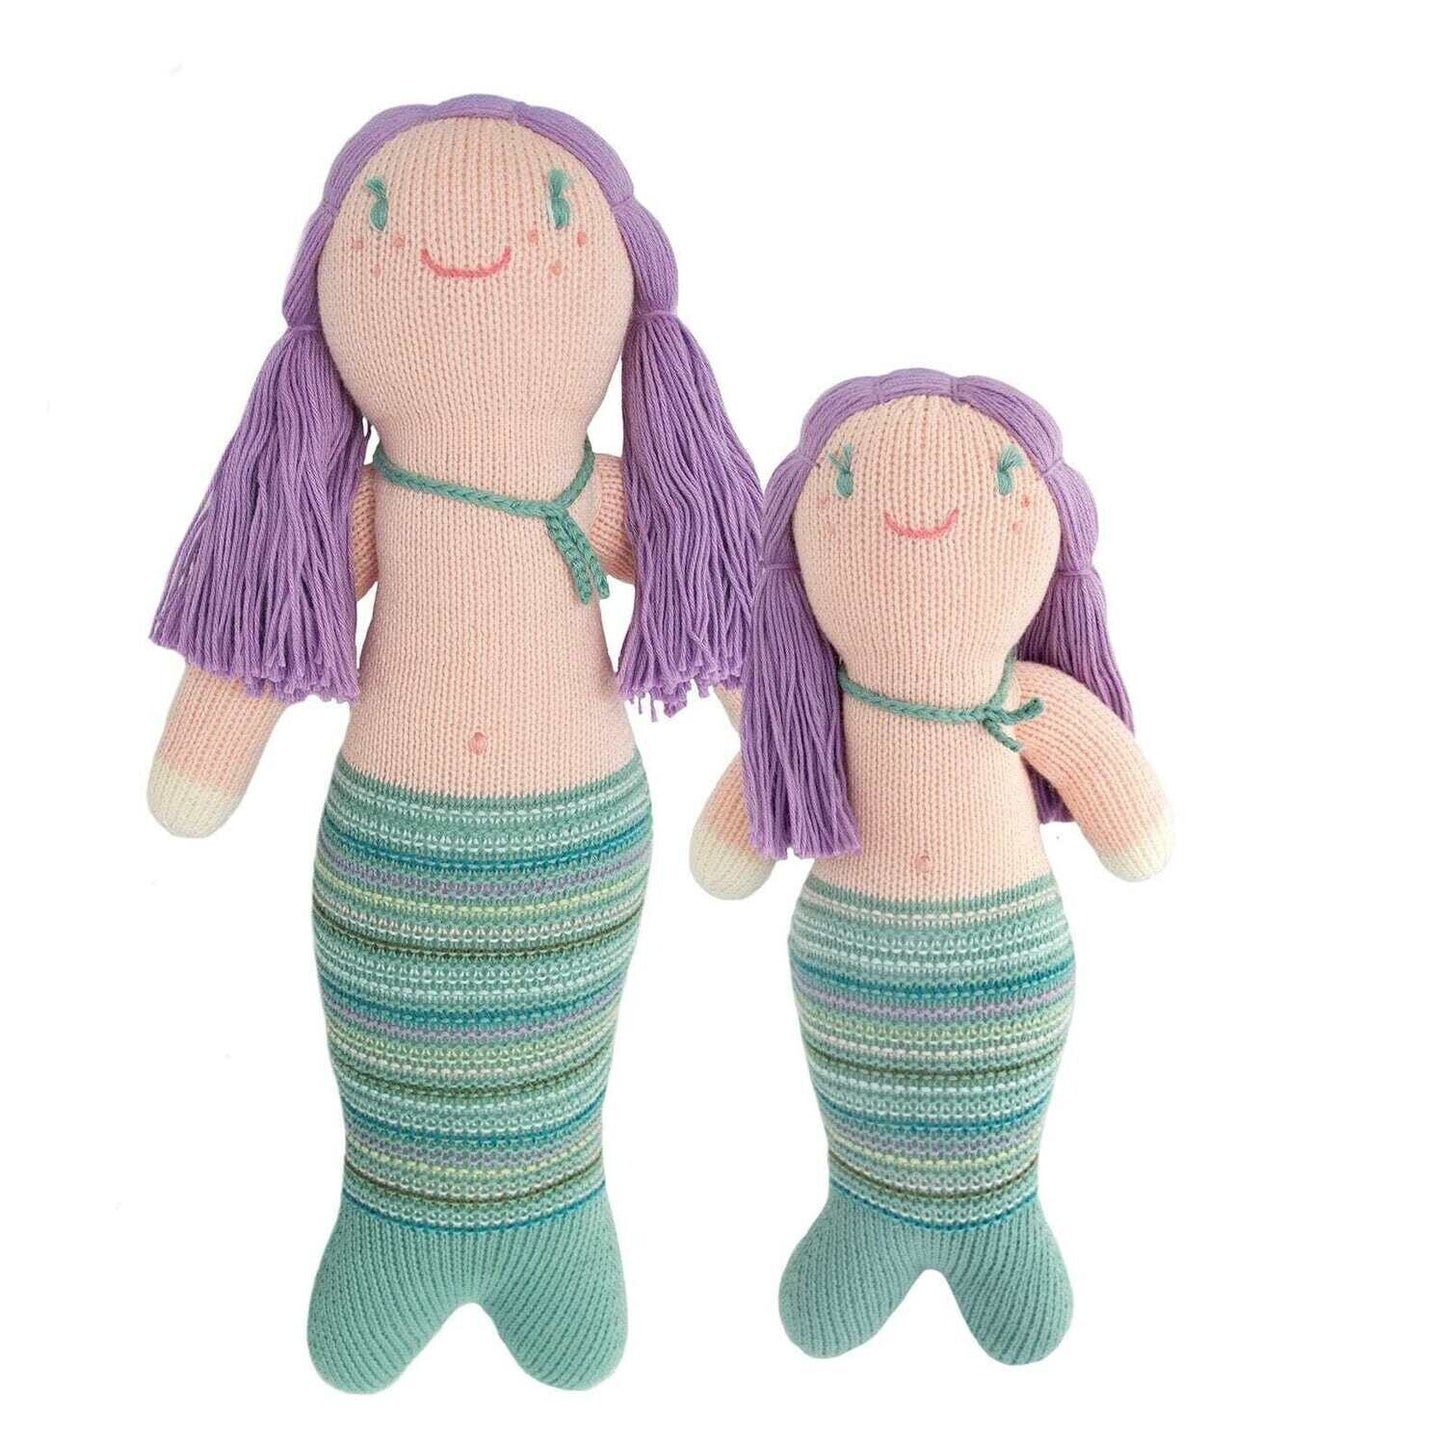 Blabla Kids Doll - Calypso the Mermaid